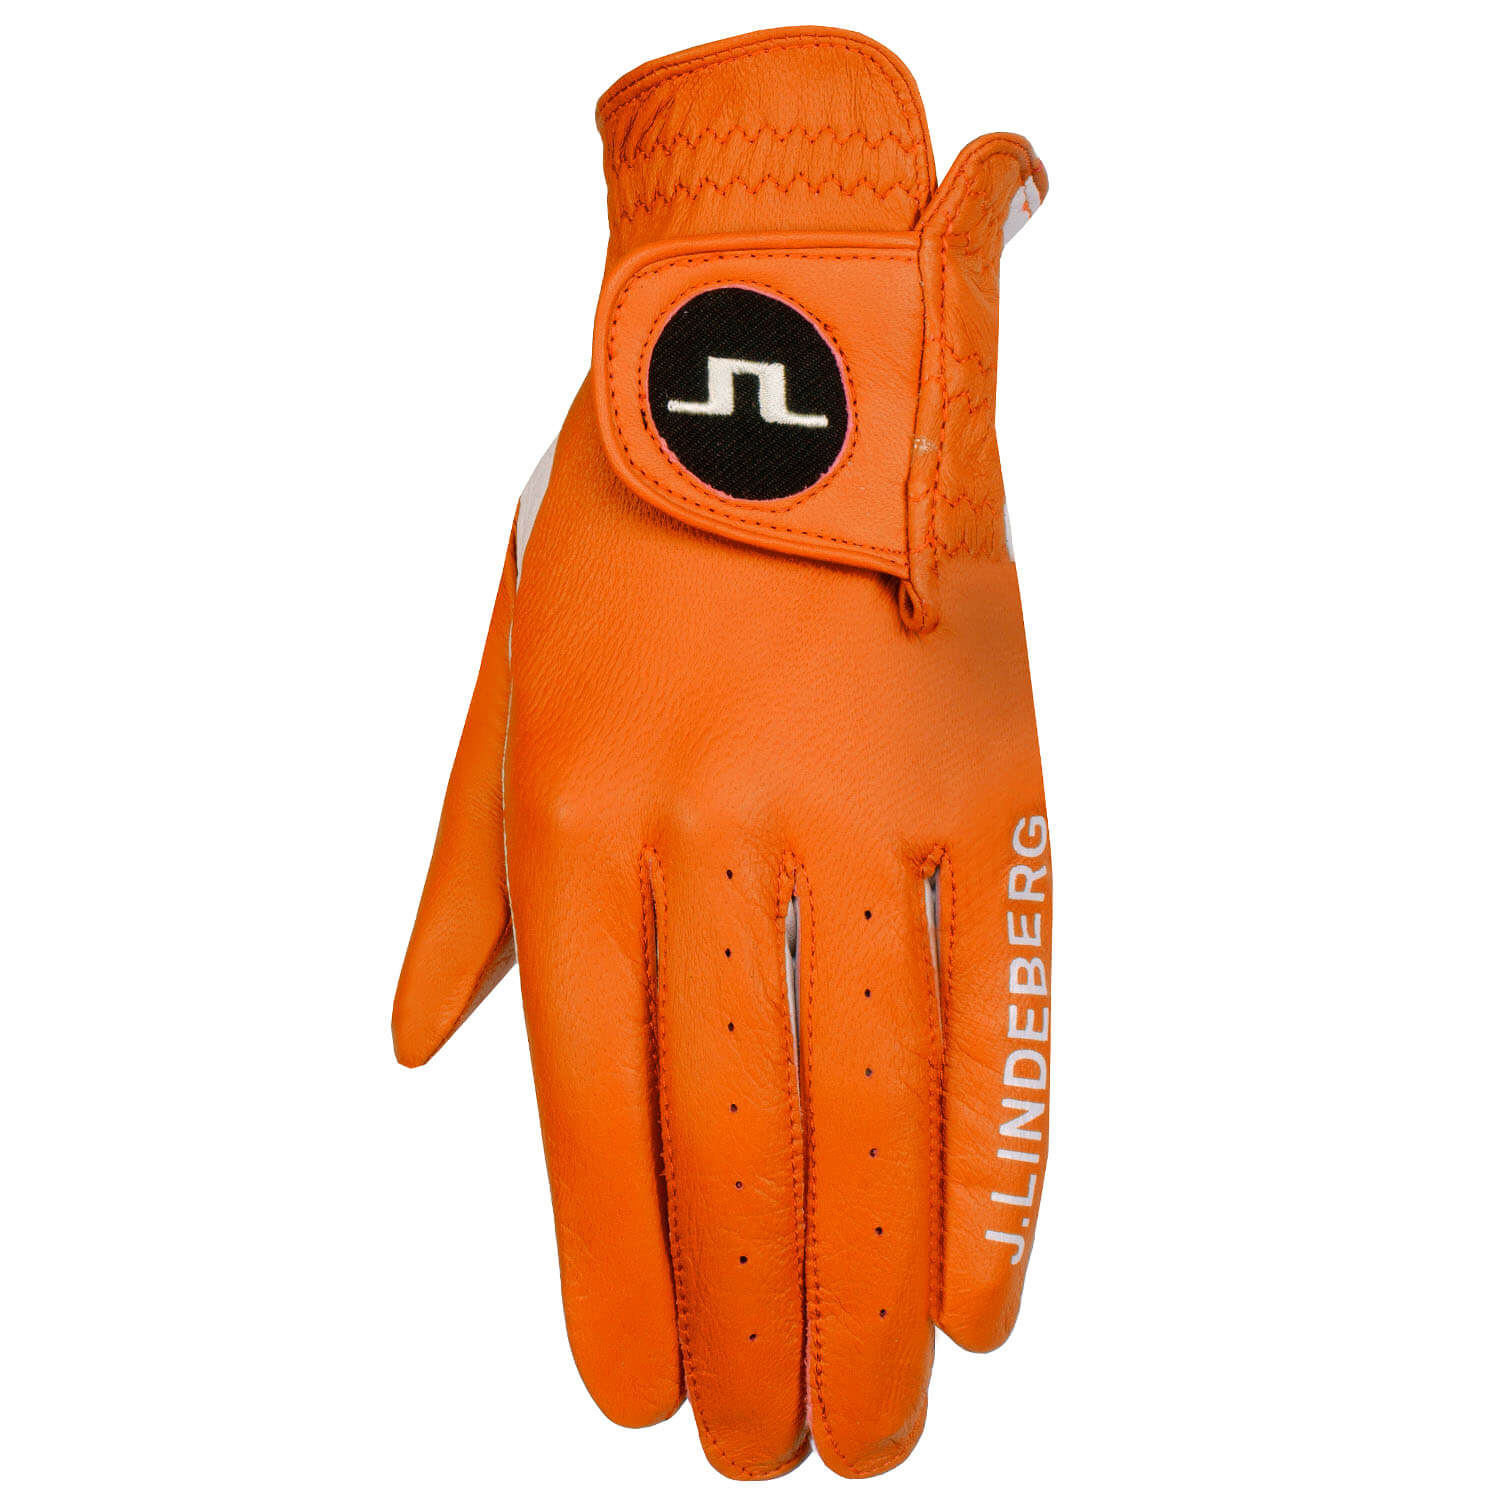 Image of J Lindeberg Ron Premium Leather Golf Glove